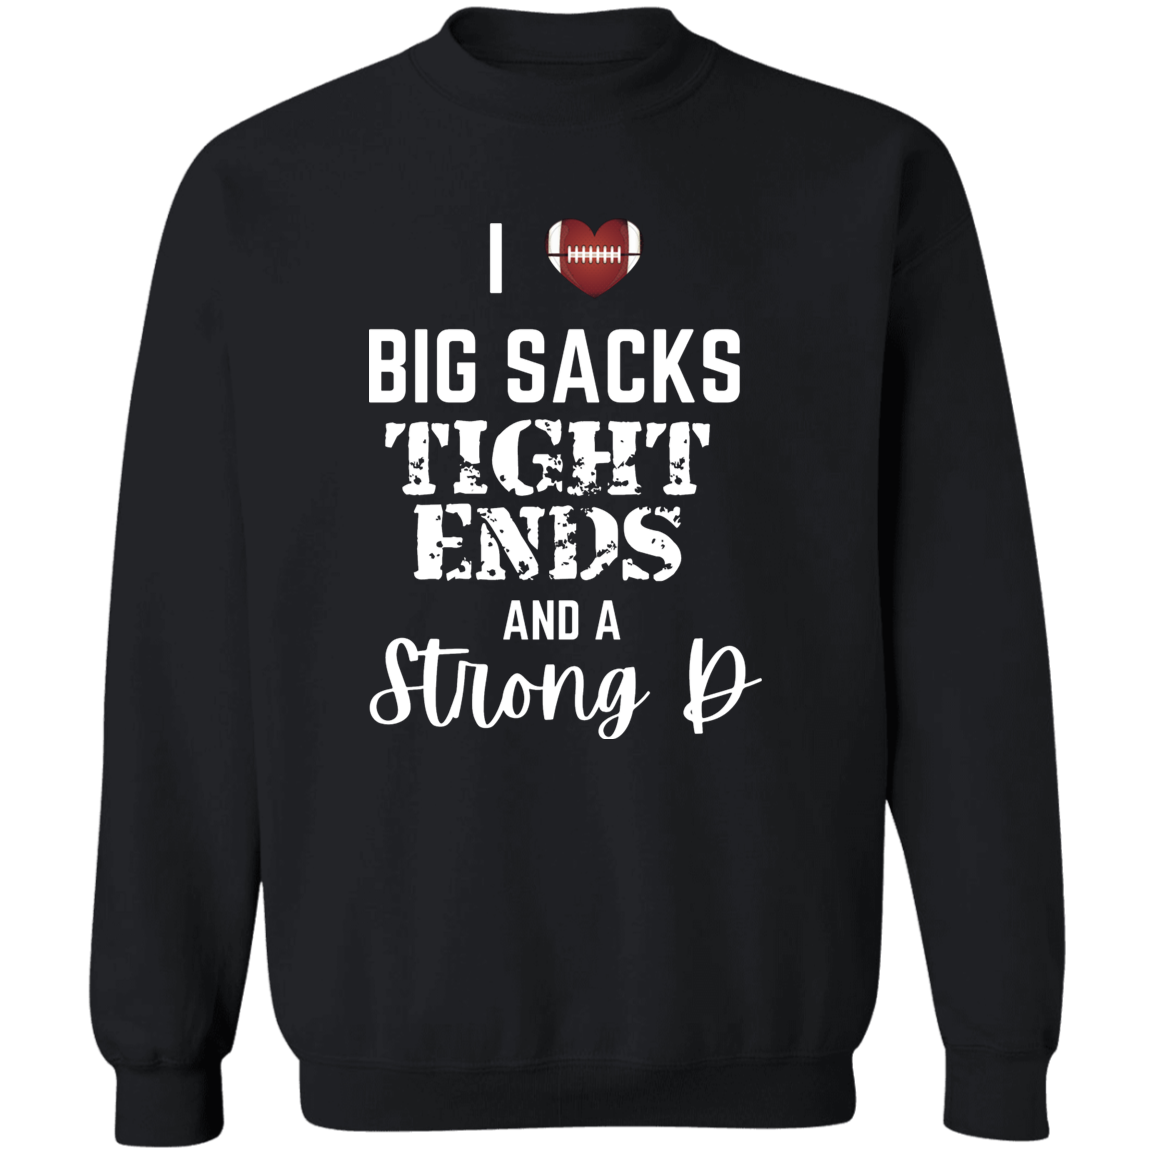 BIG SACKS Sweatshirt 8 oz (Closeout)